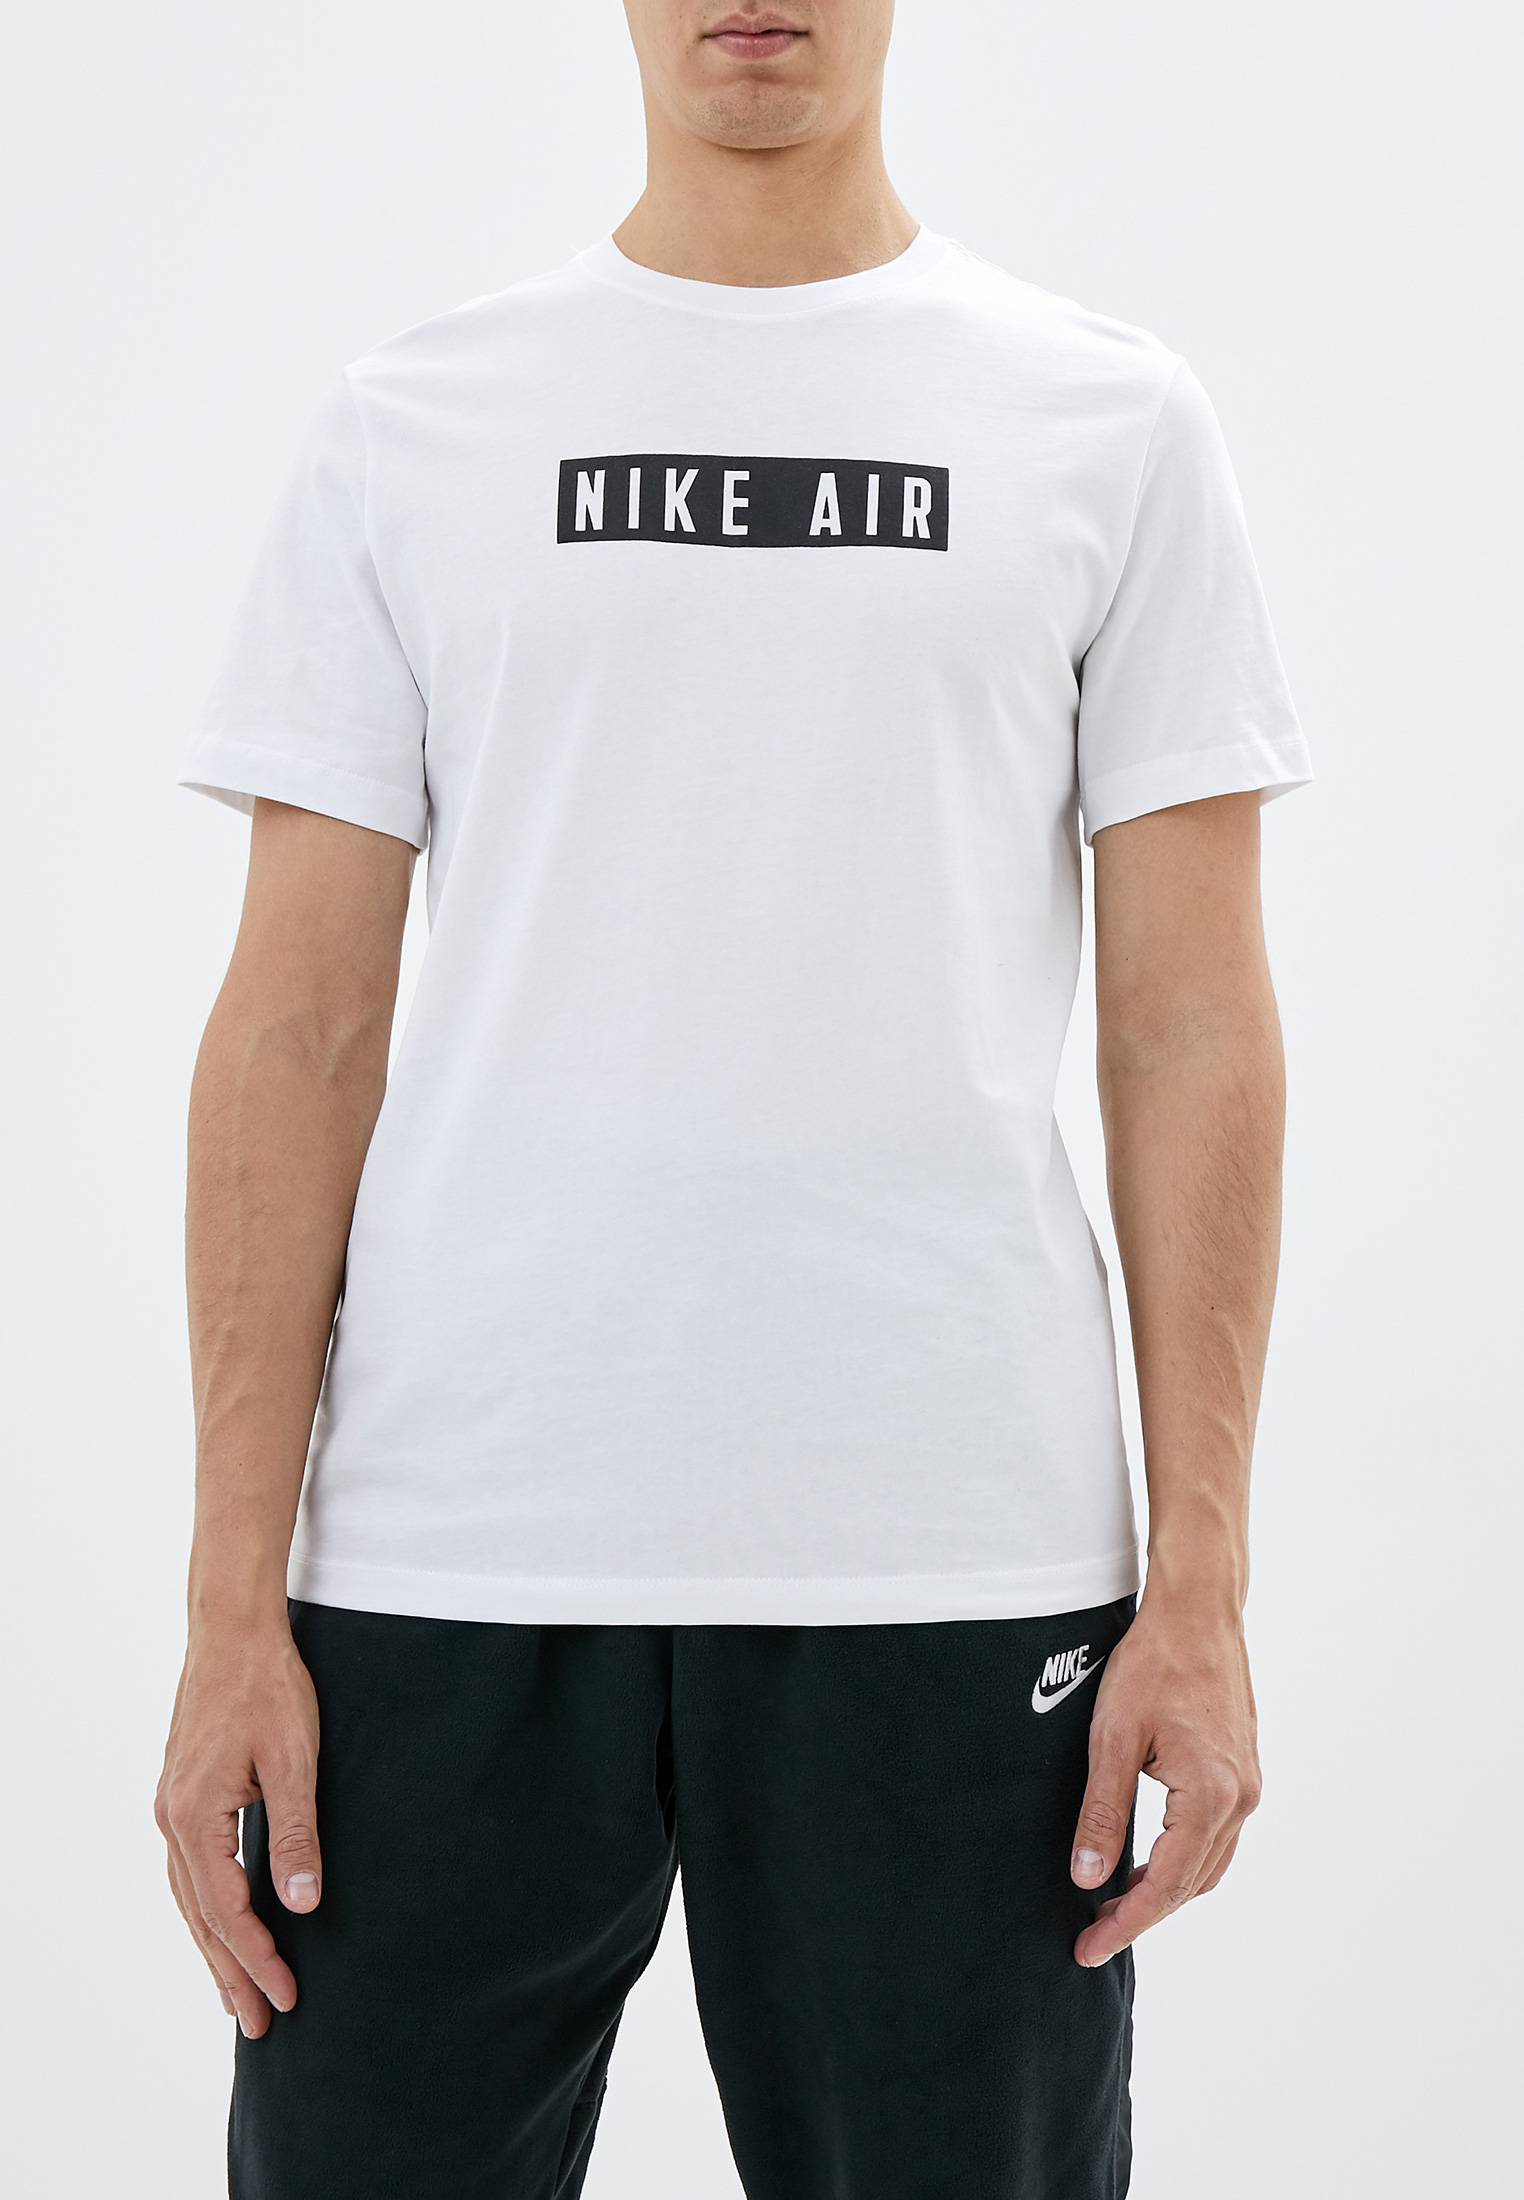 Футболка найк АИР белая. Nike Air футболка мужская. Футболка мужская белая Air. Найк футболка цвета. Ламода купить футболки